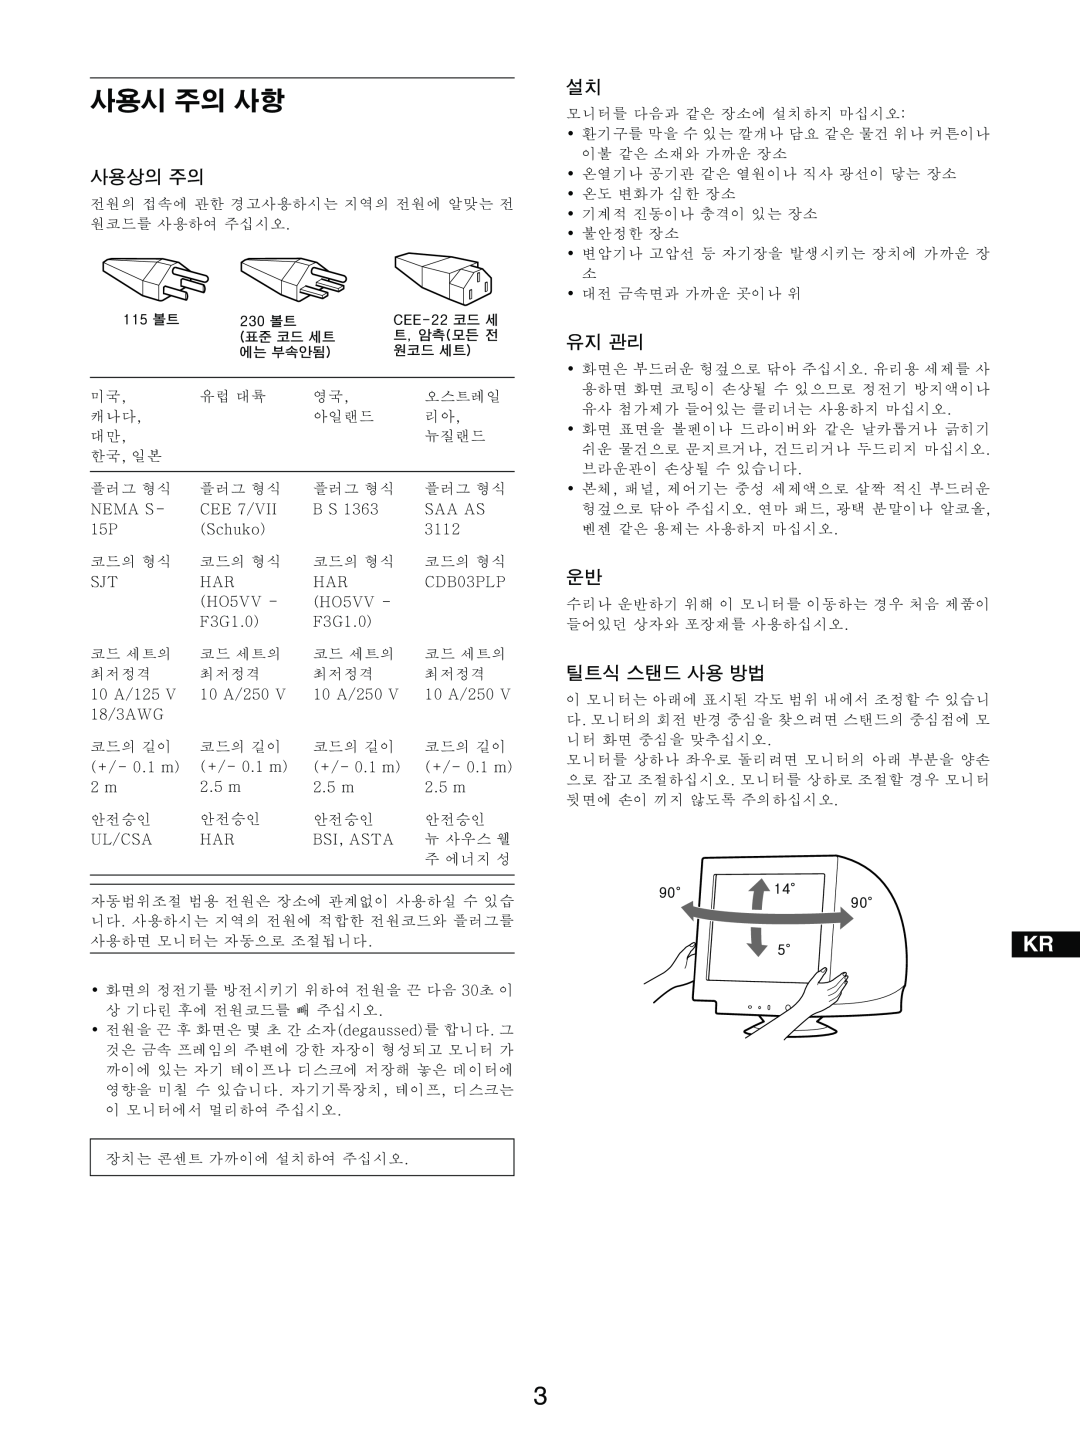 Sony GDM-5510 operating instructions 